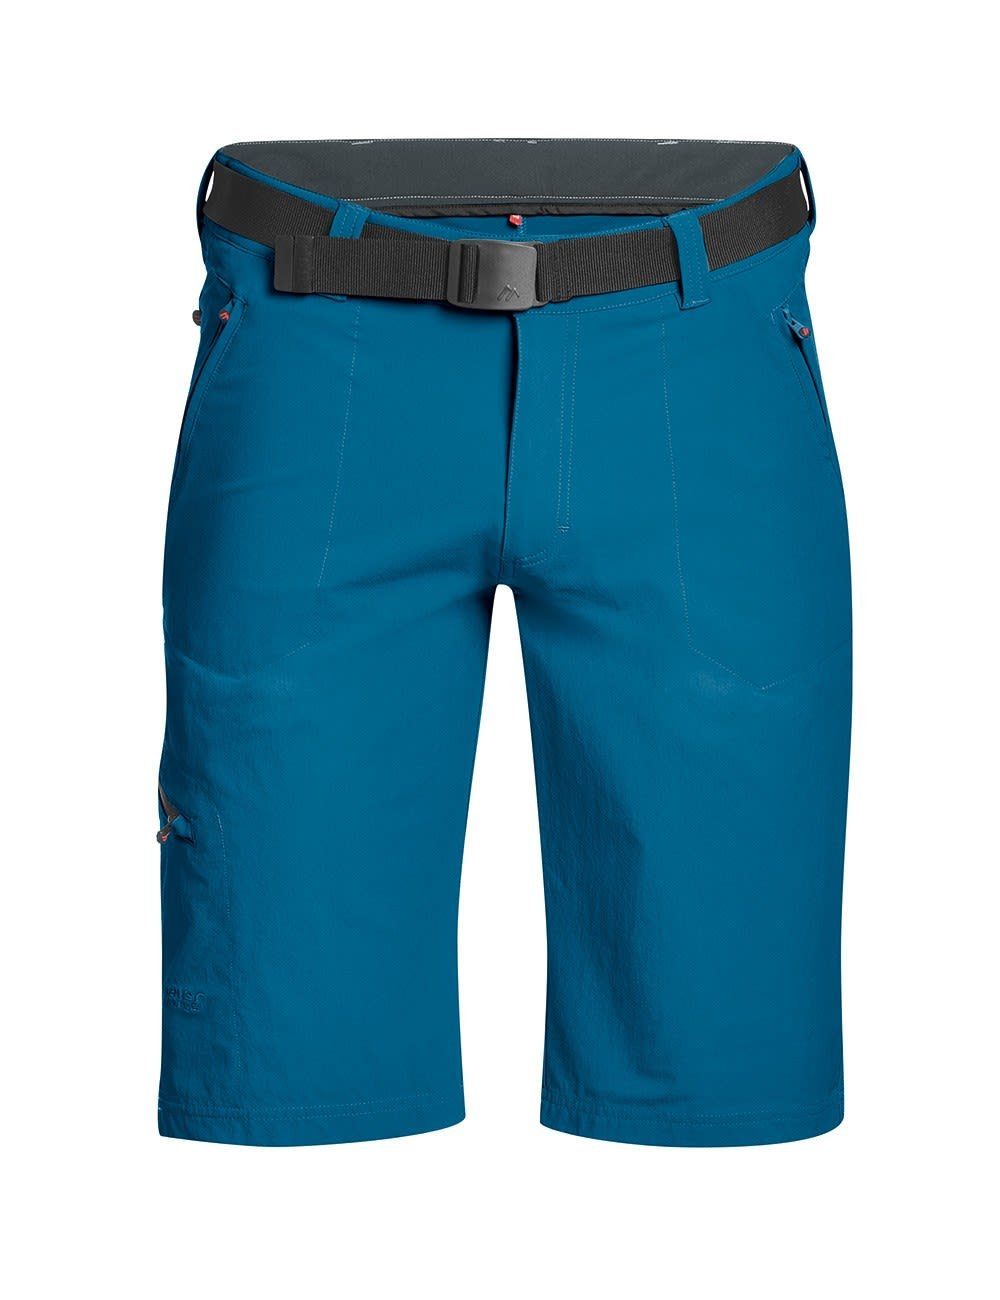 Maier Sports Strandshorts Maier Bermuda M Blue Sports Nil Sapphire Herren Shorts